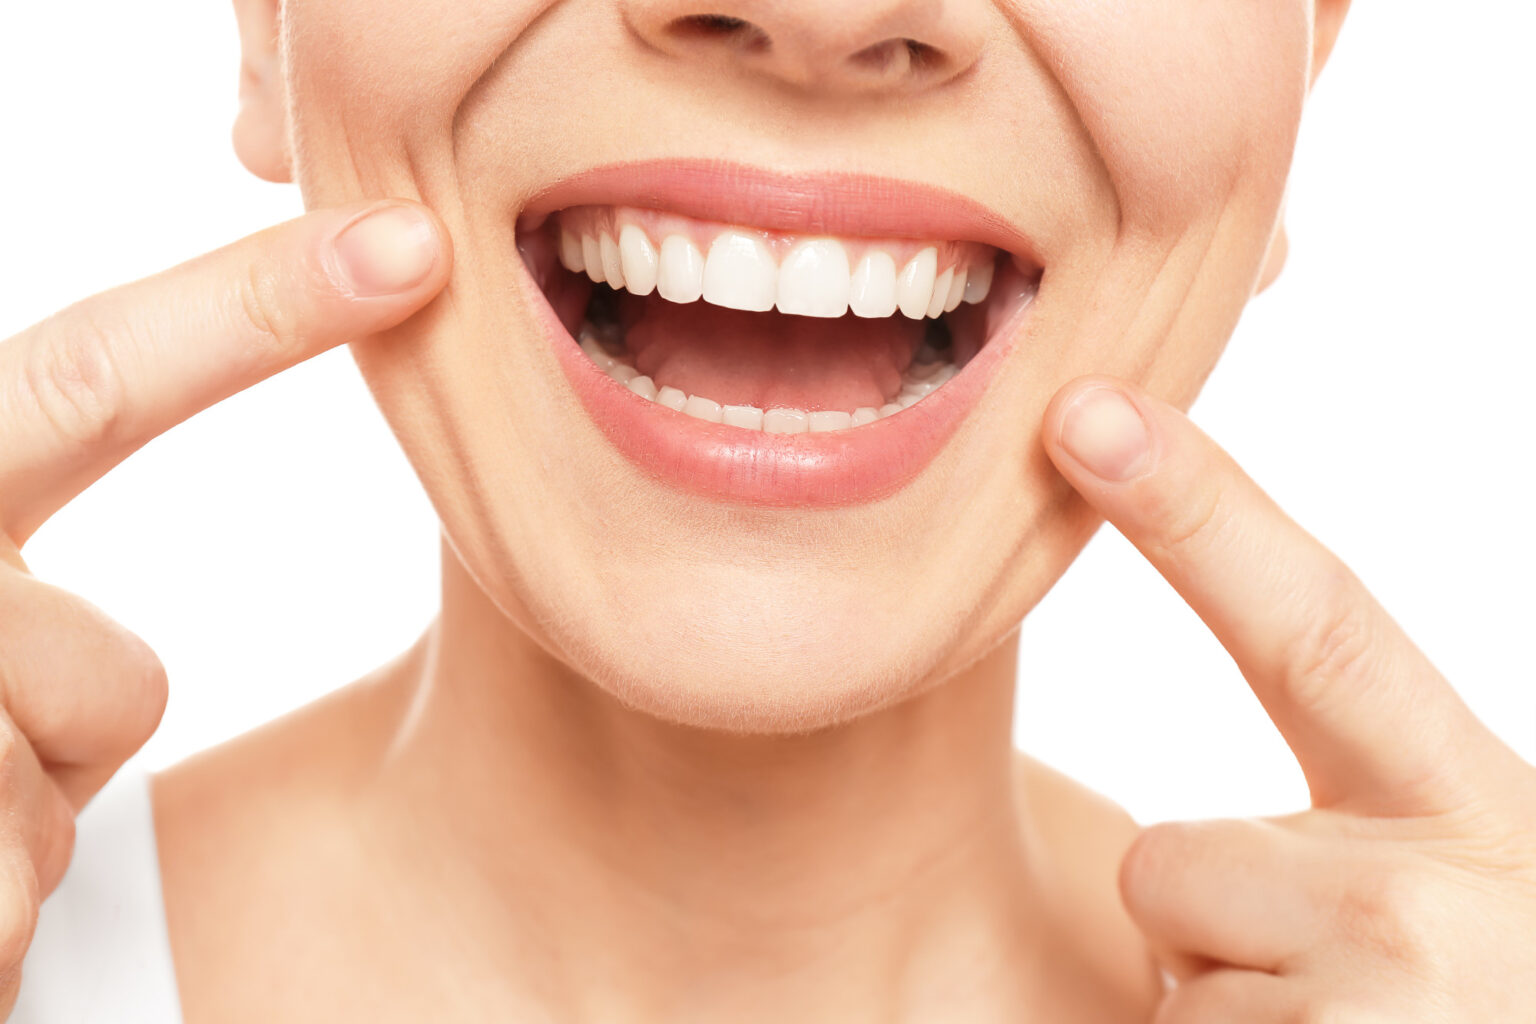 7 Health Benefits of Having Perfectly Straight Teeth